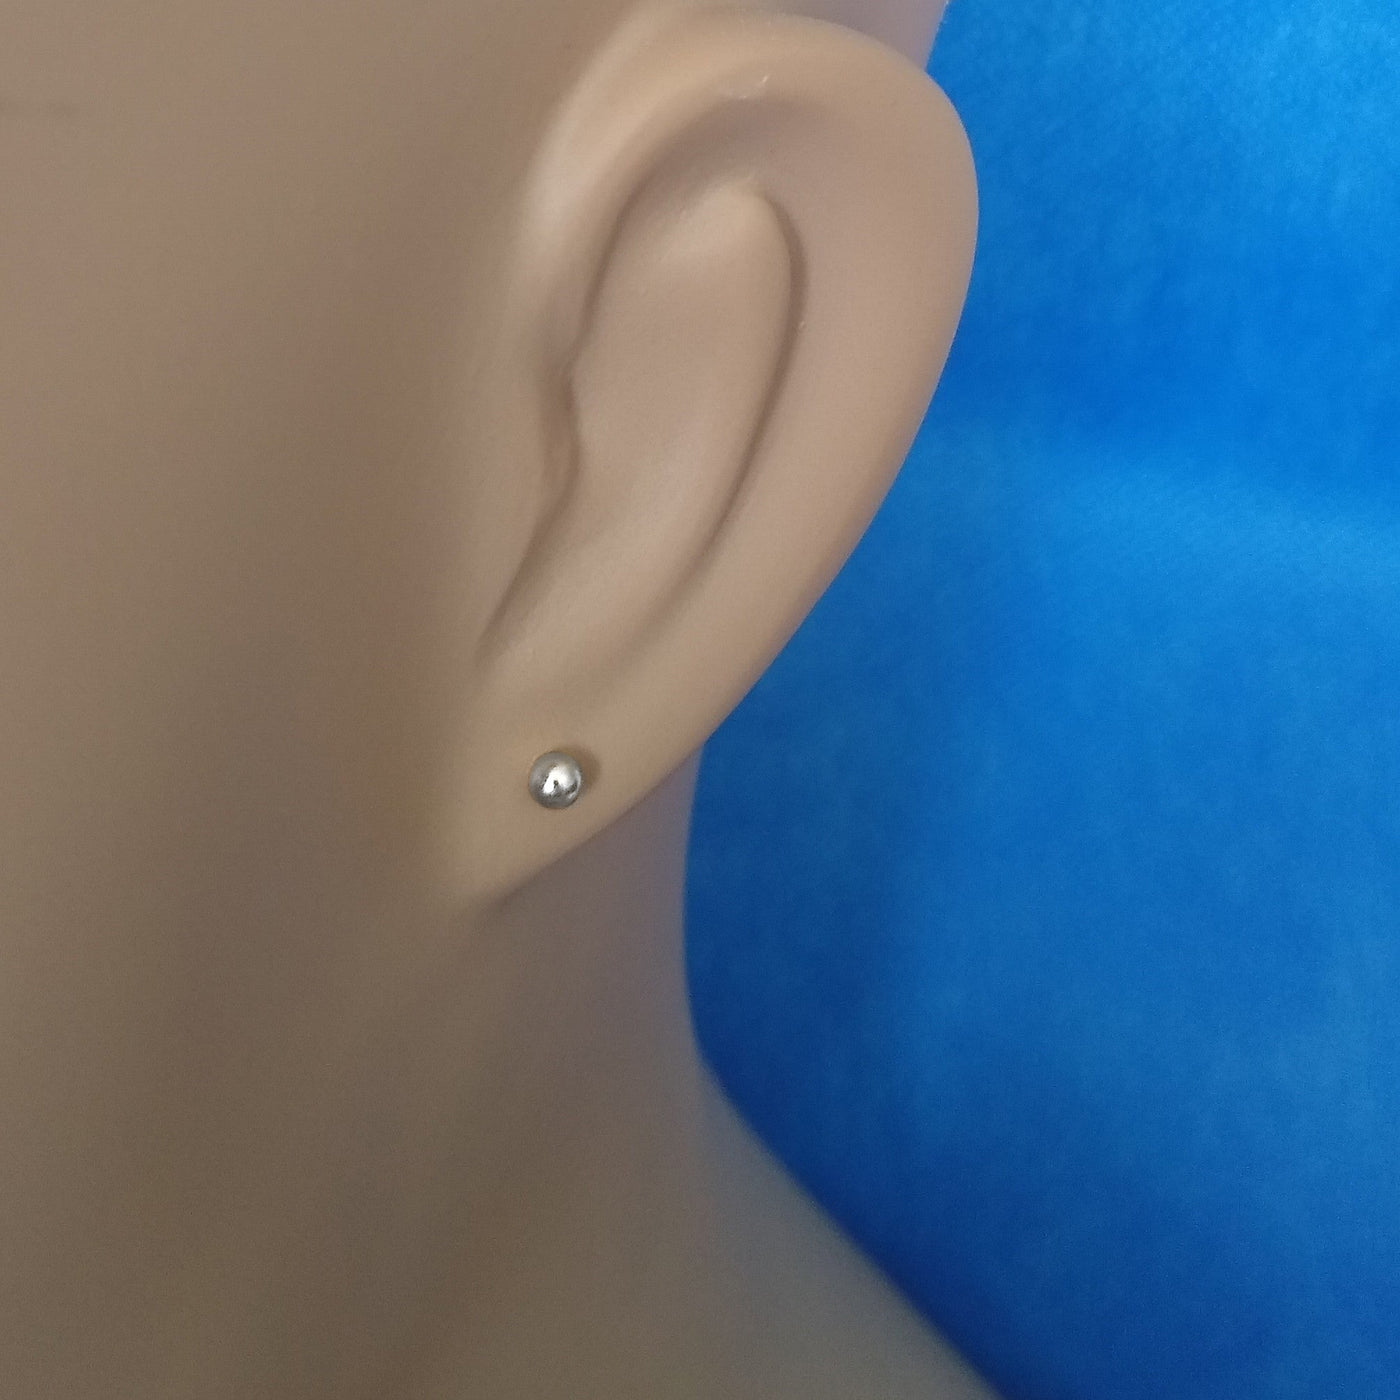 9ct White Gold 3mm Ball Stud Earrings